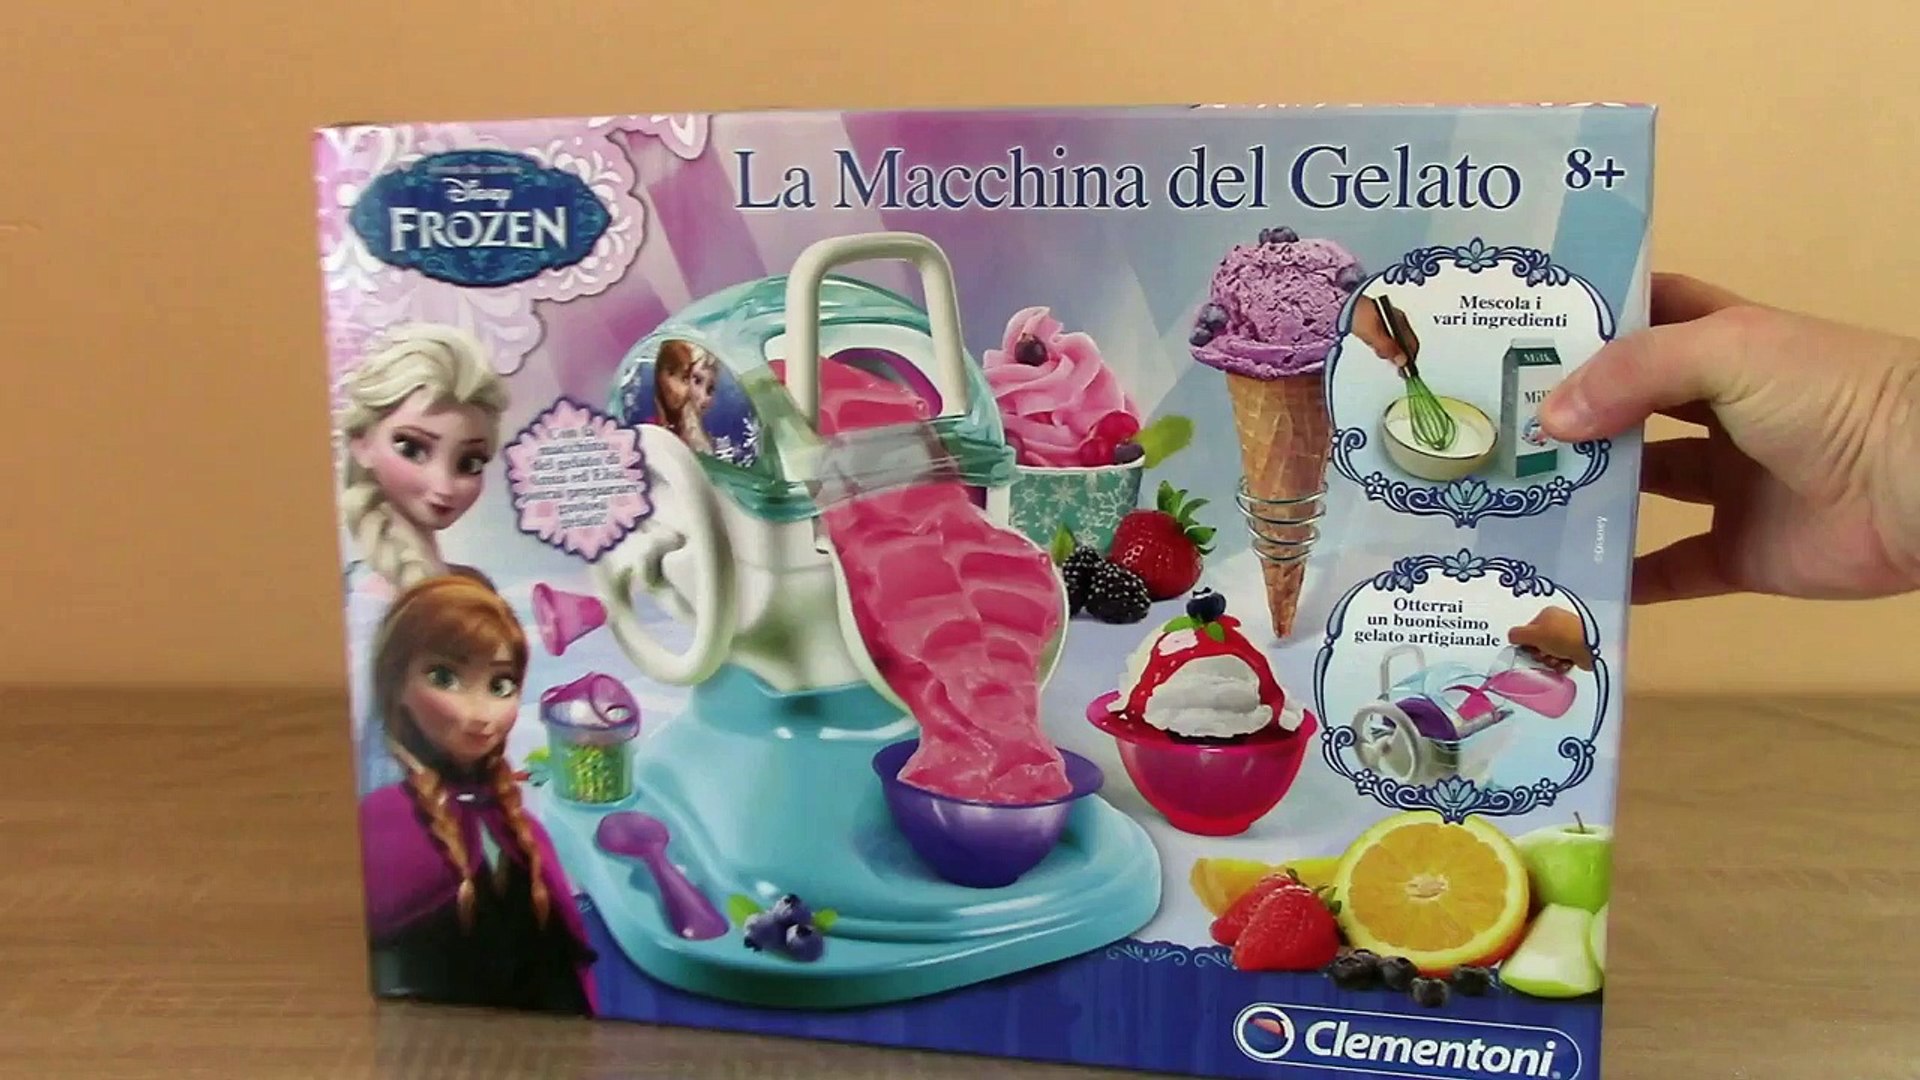 FROZEN disney Ice Cream Maker | Elsa ice cream machine for kids, girls  Review (macchina del gelato) – Видео Dailymotion